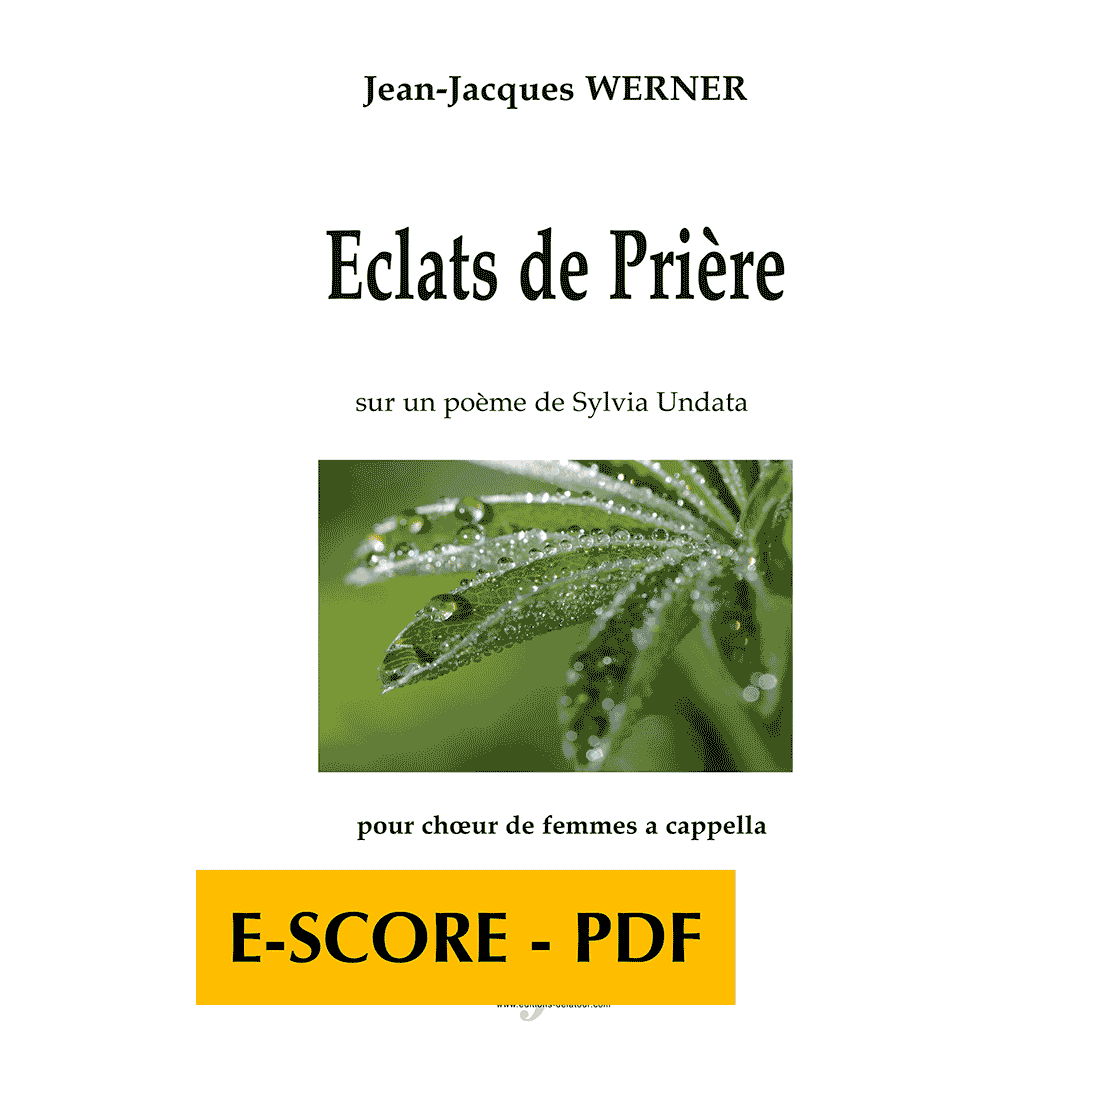 Eclats de prière für Frauenchor a cappella - E-score PDF